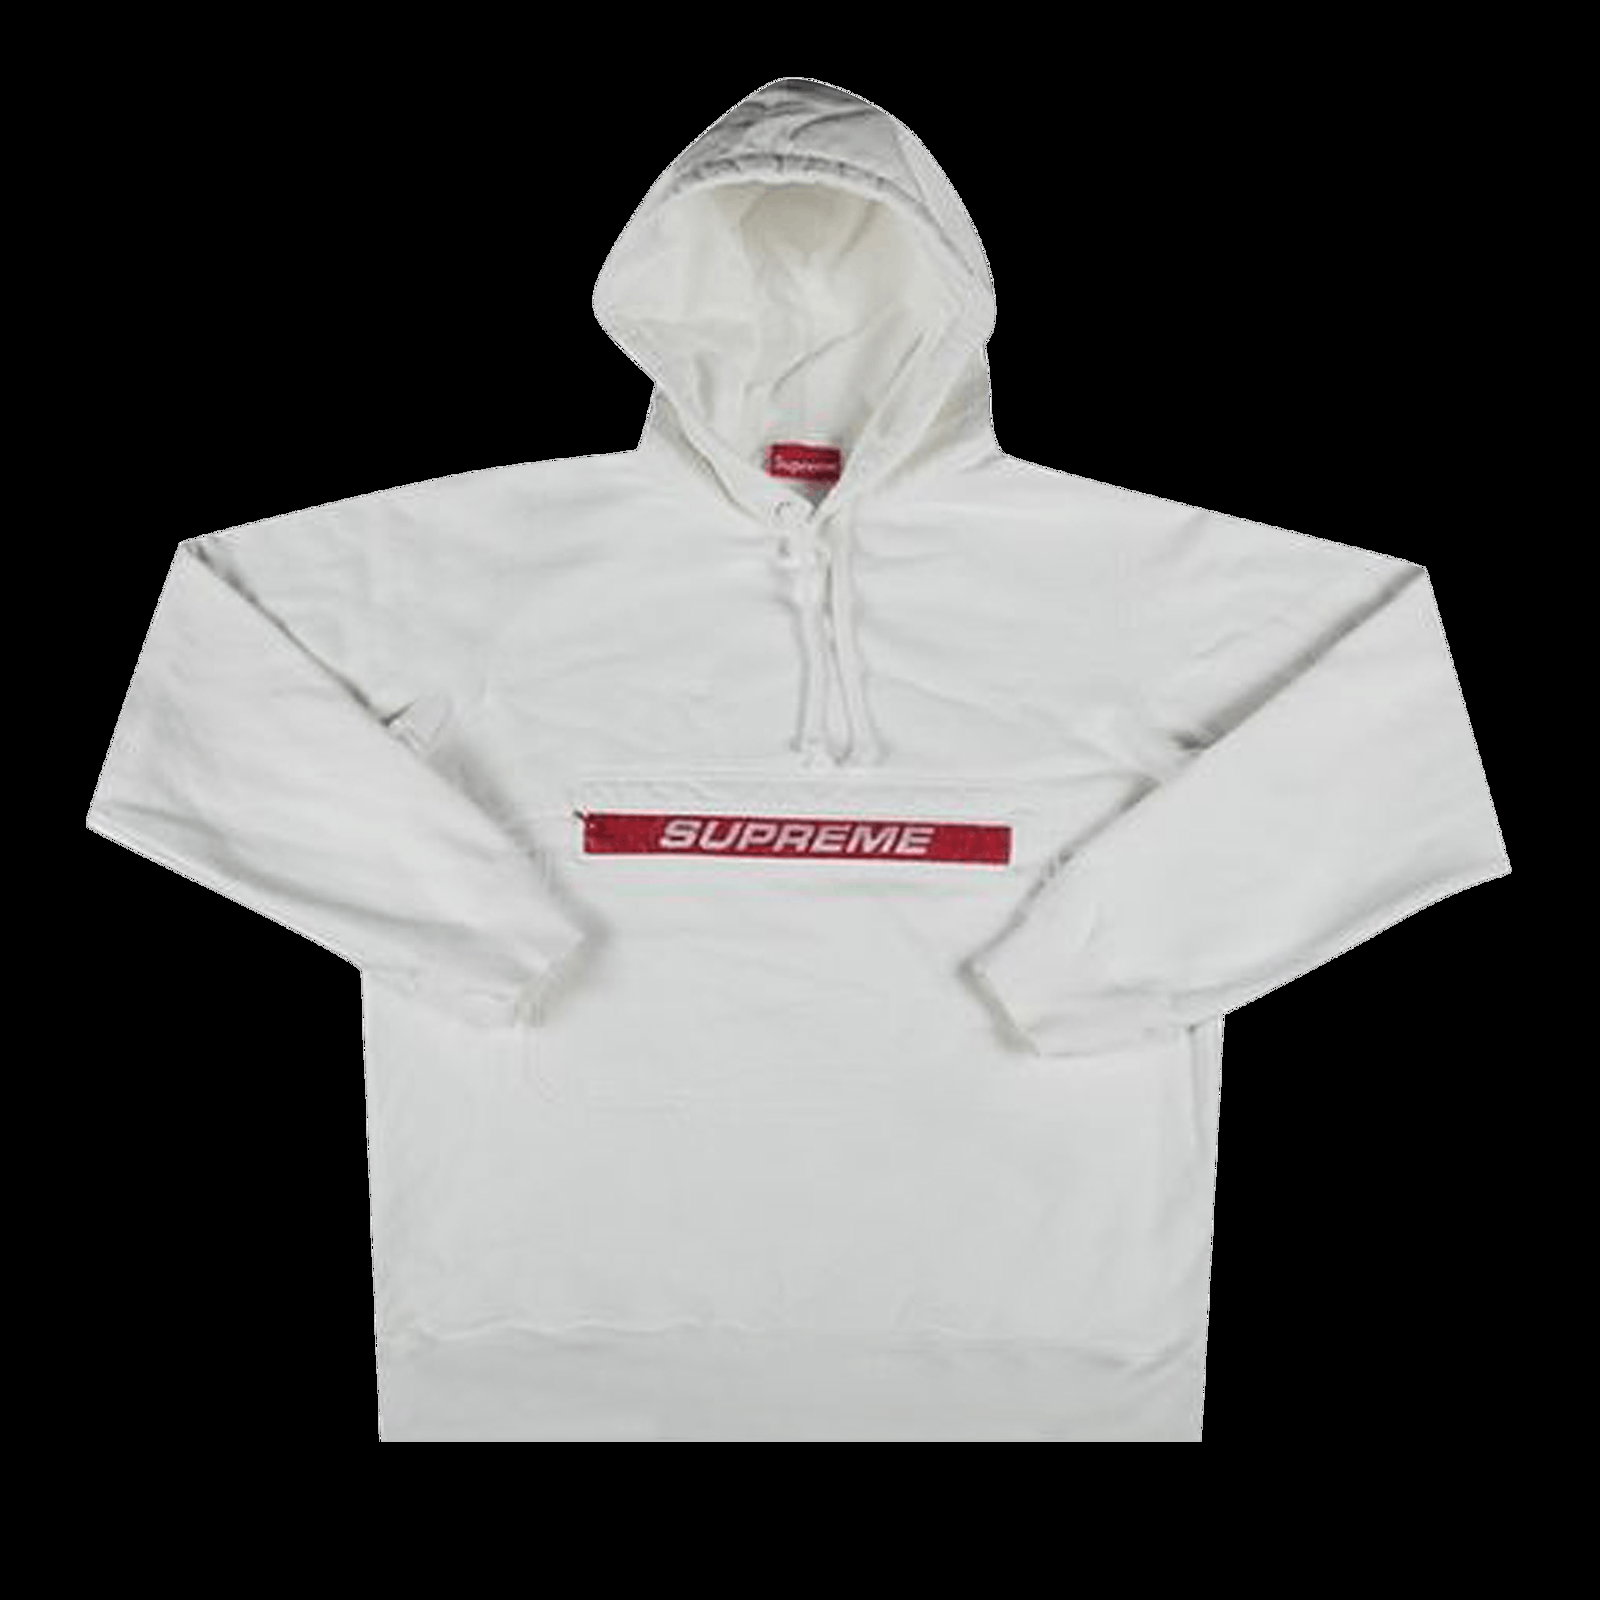 Supreme Zip Pouch Hooded Sweatshirt - パーカー